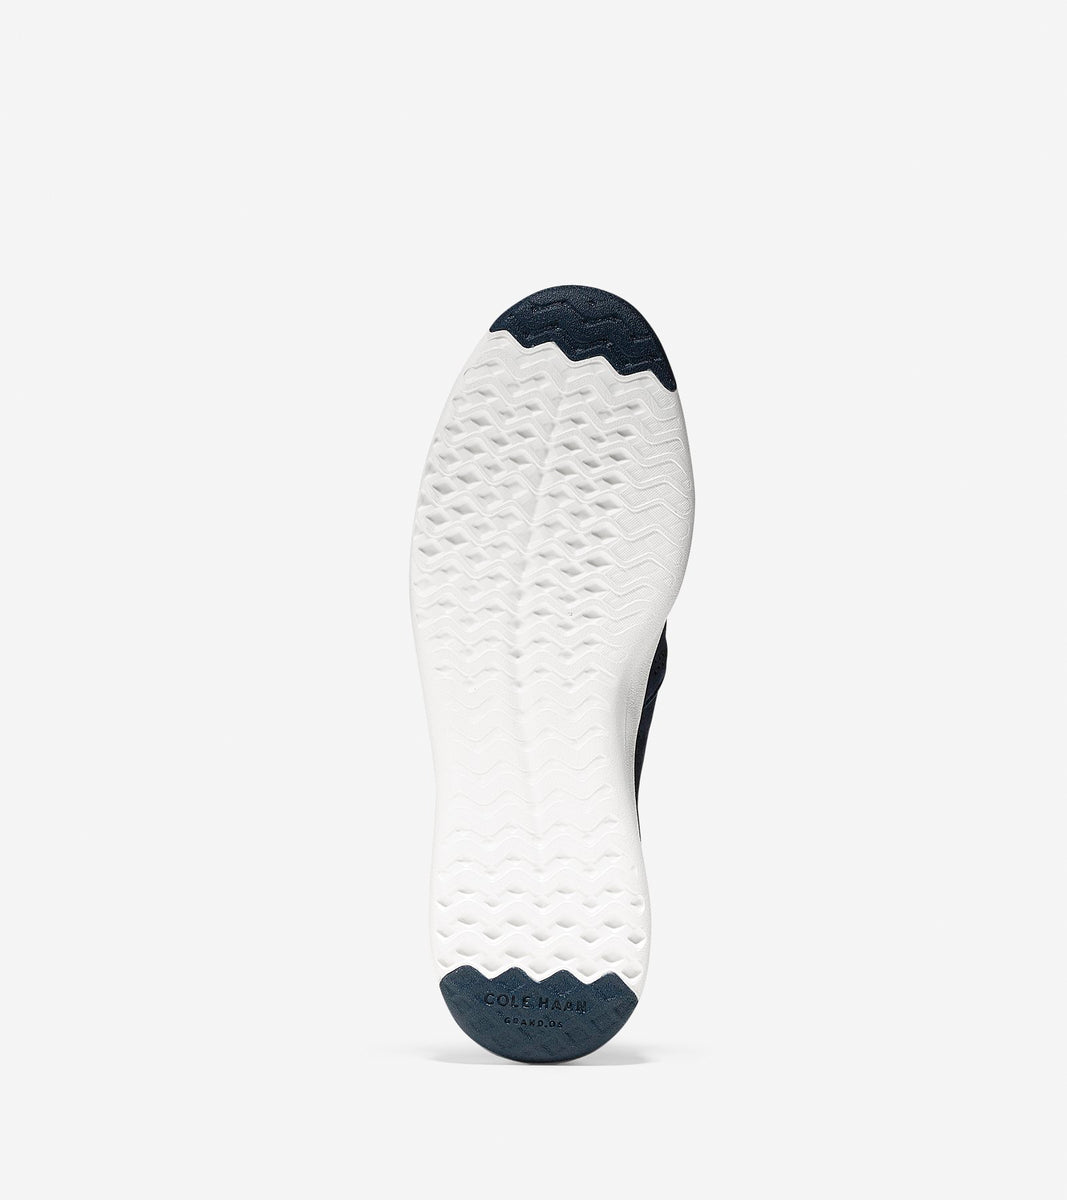 ColeHaan-GrandPrø Paisley Perforated Slip On Sneaker-w07201-Marine Blue Nubuck